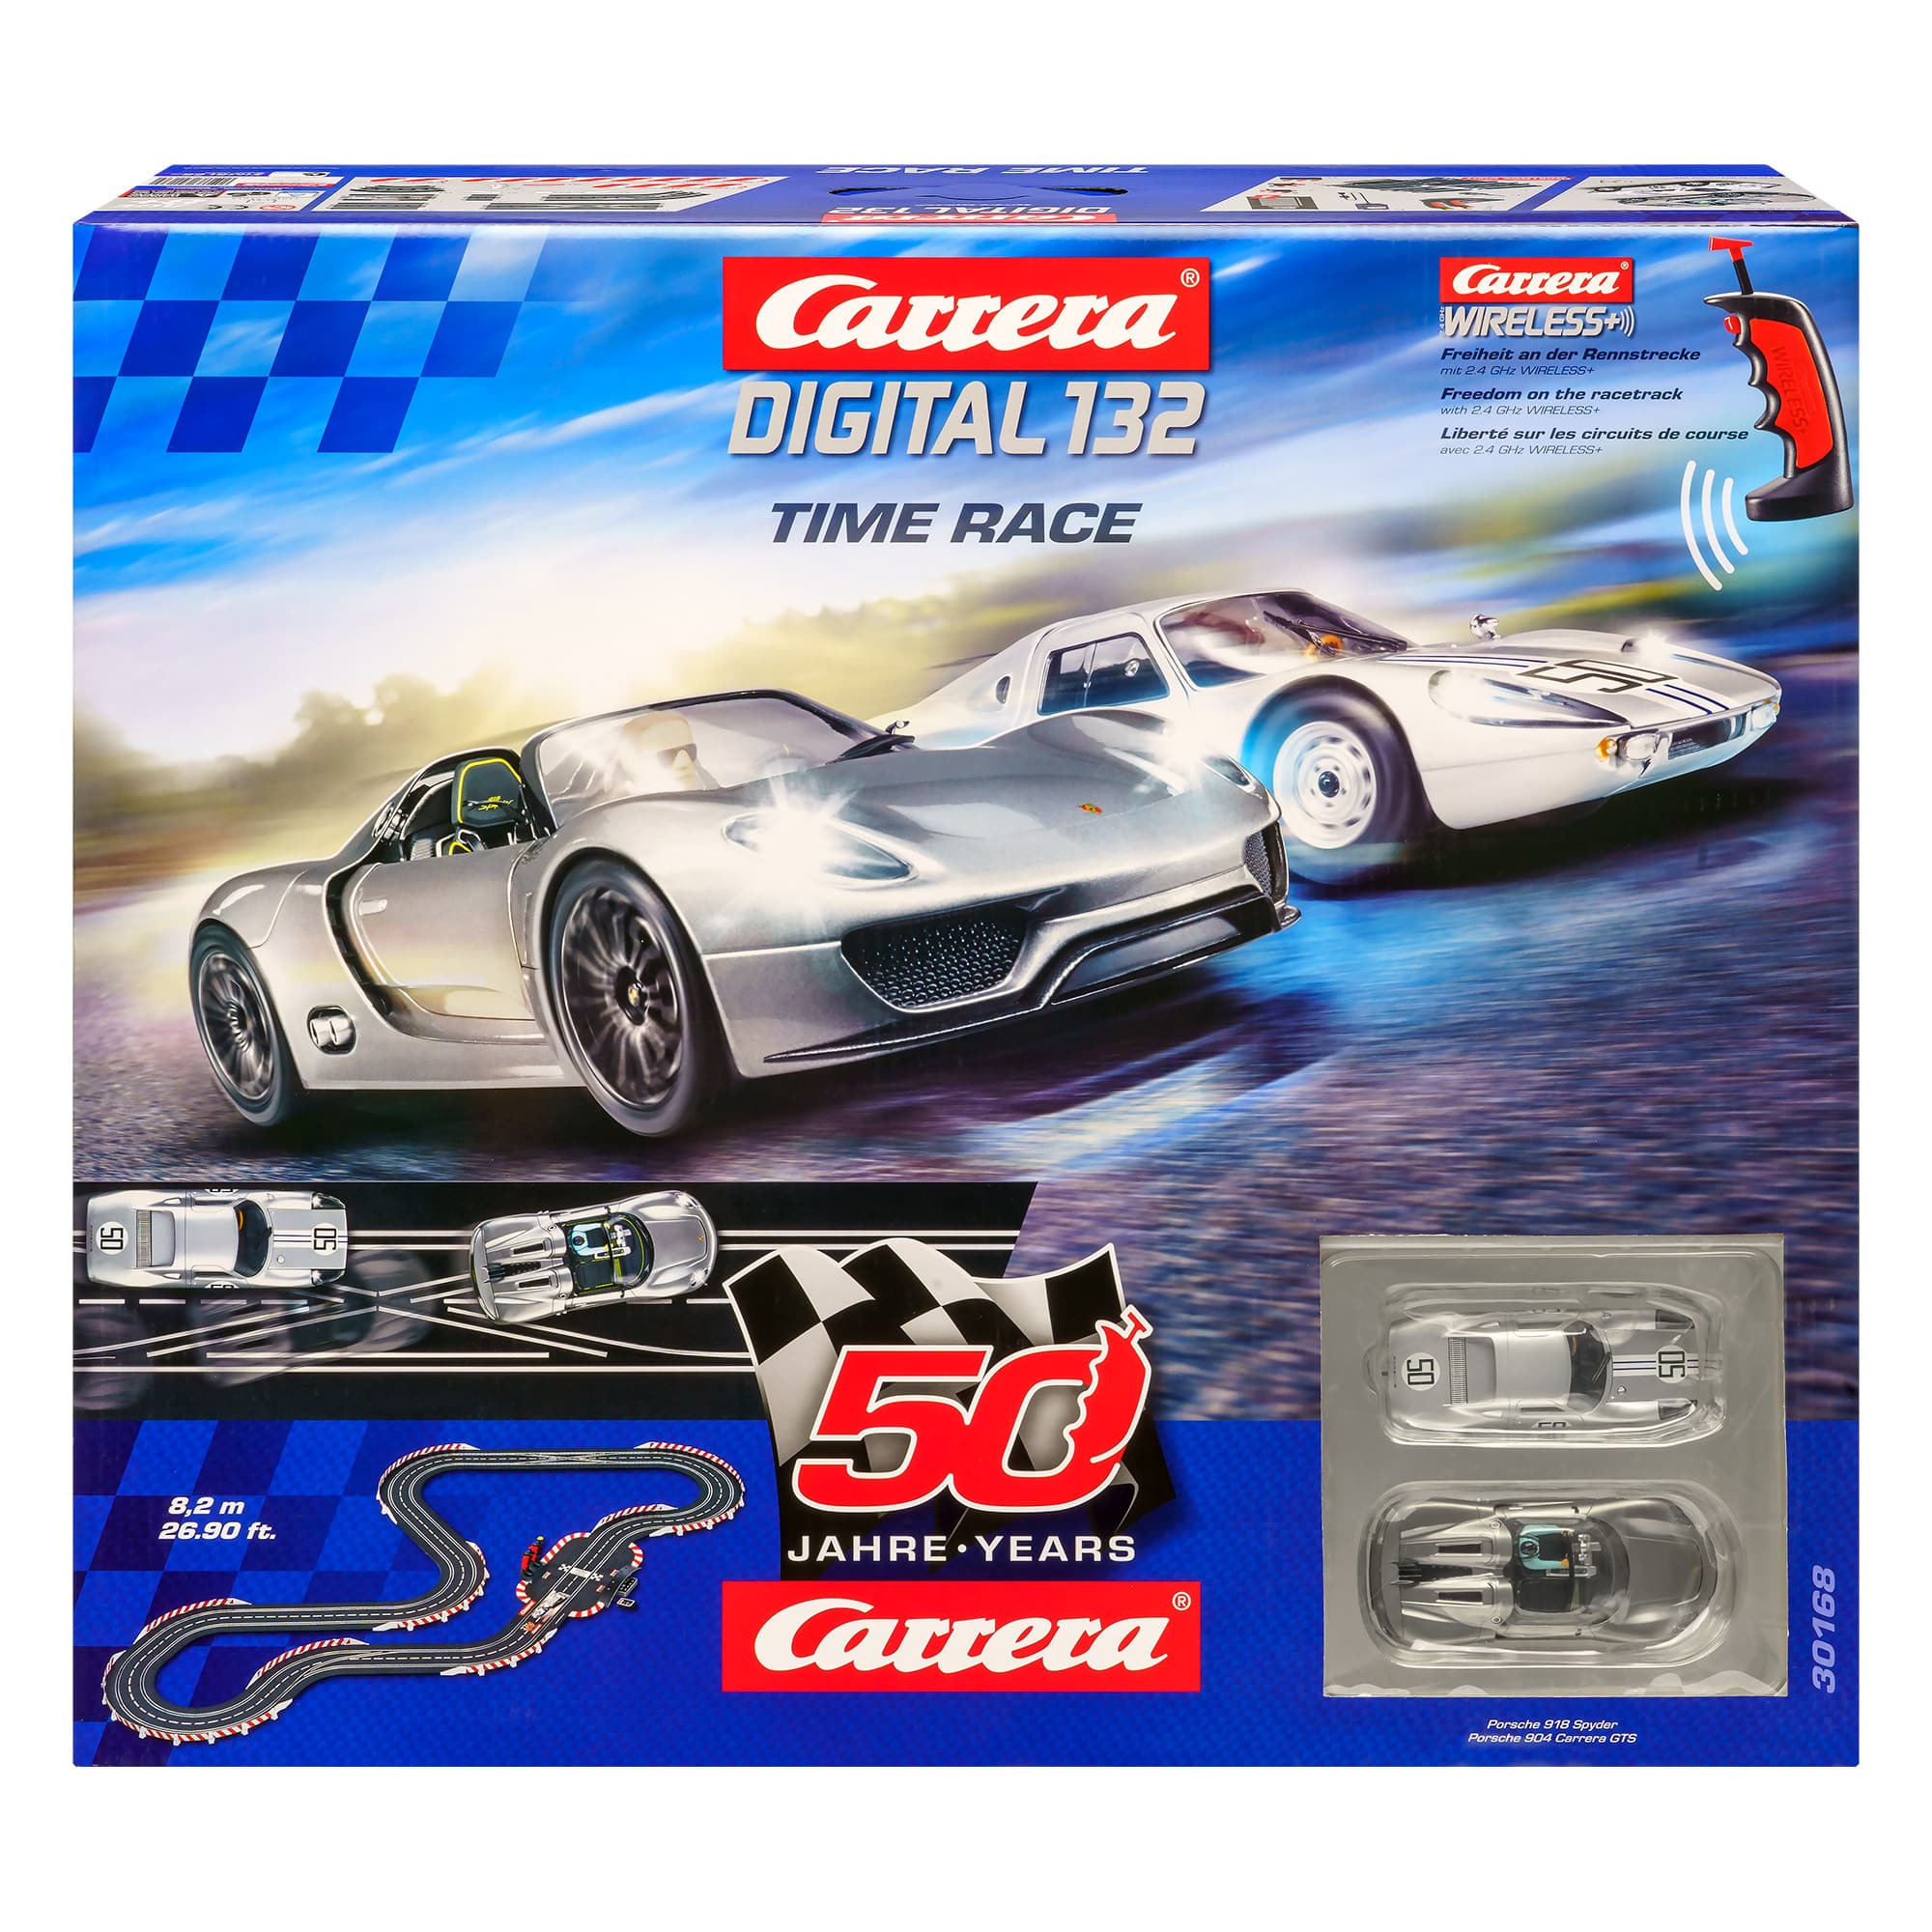 Carrera Digital 132 - Time Race - Online Toys Australia